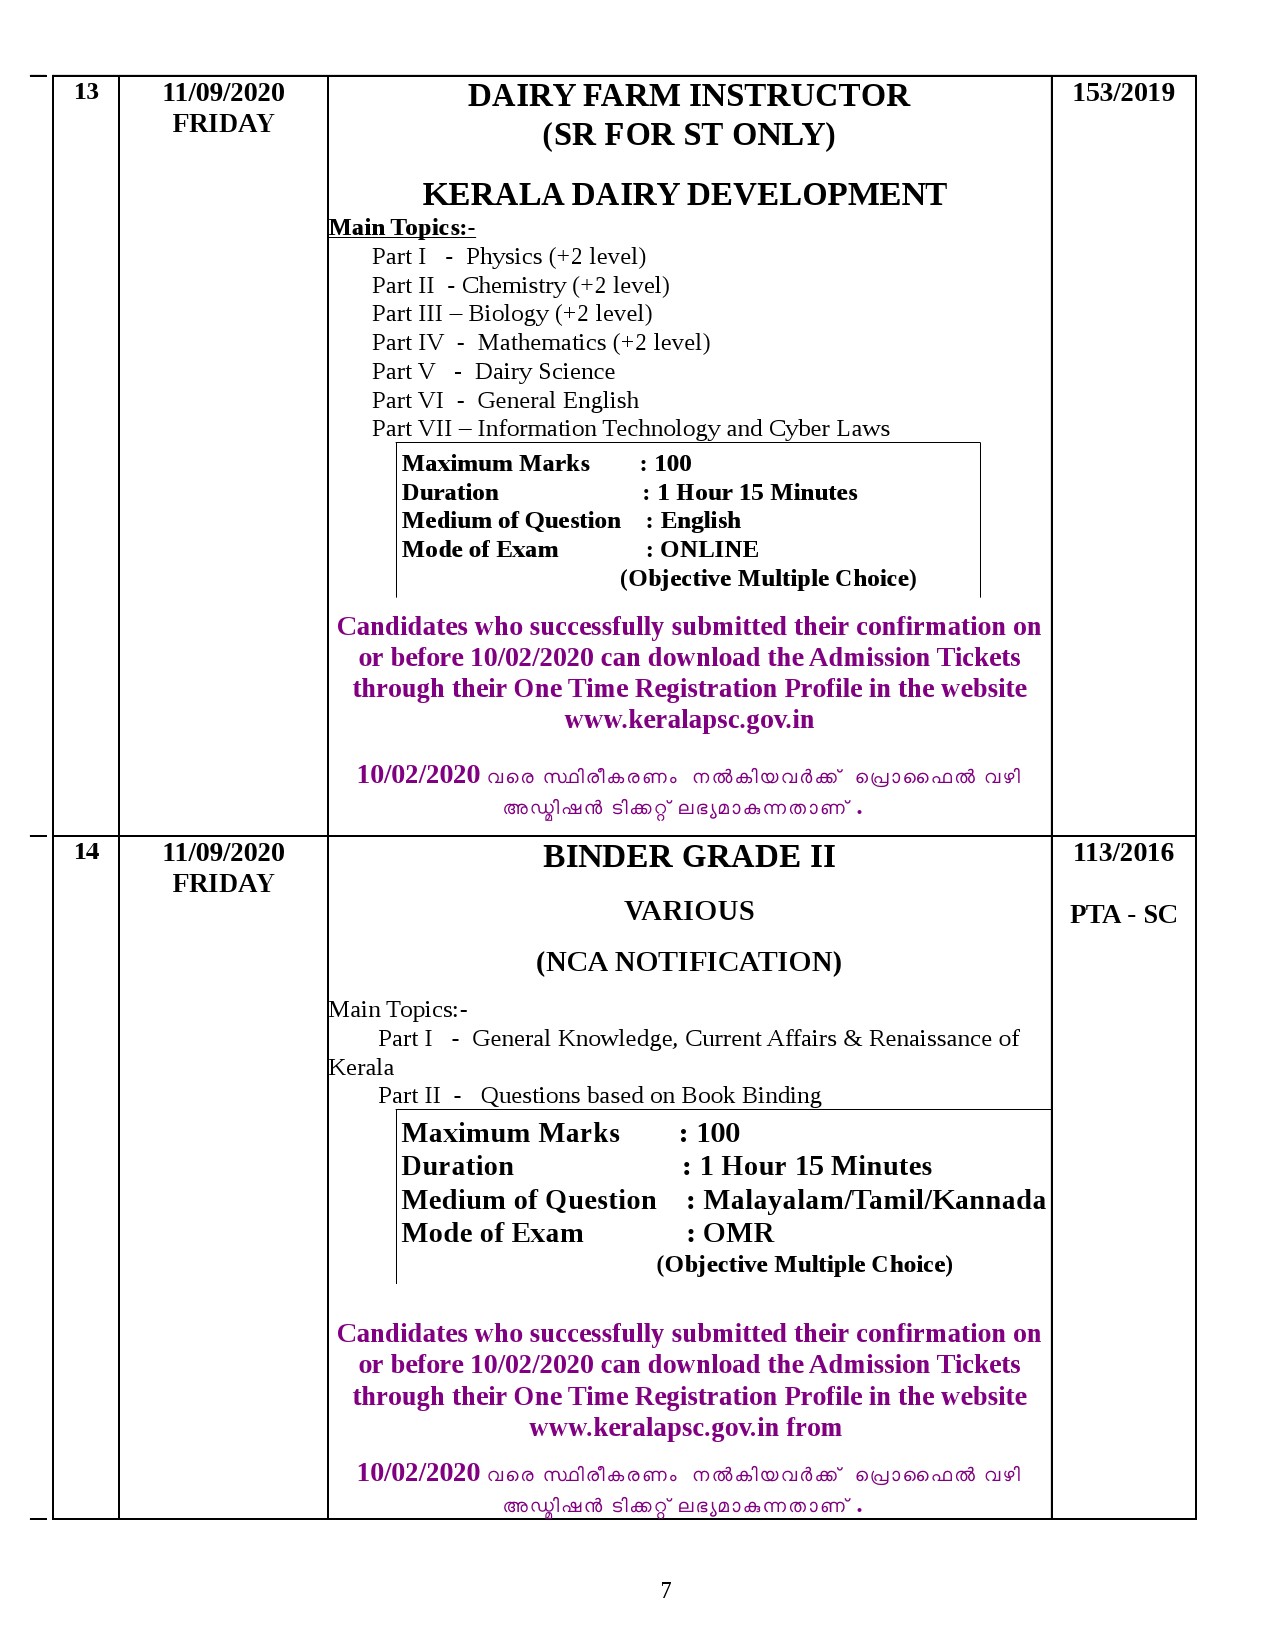 Kerala PSC Exam Calendar September 2020 - Notification Image 7